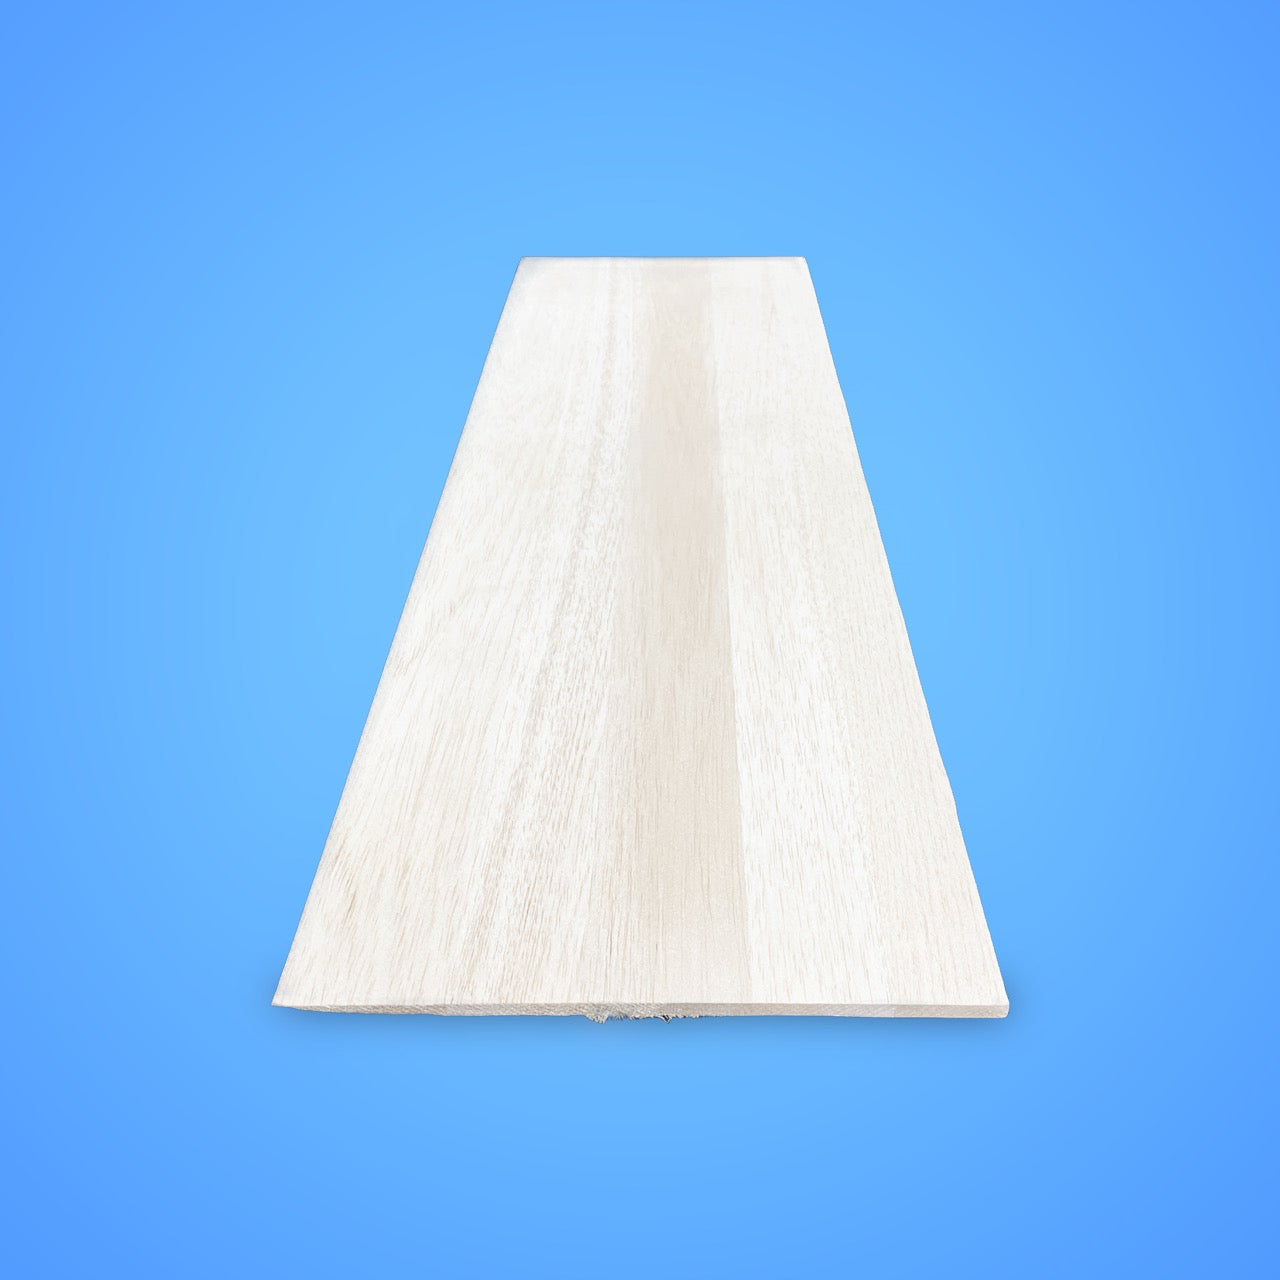 3/32 x 4 x 48 Aero Light Balsa Wood Sheets